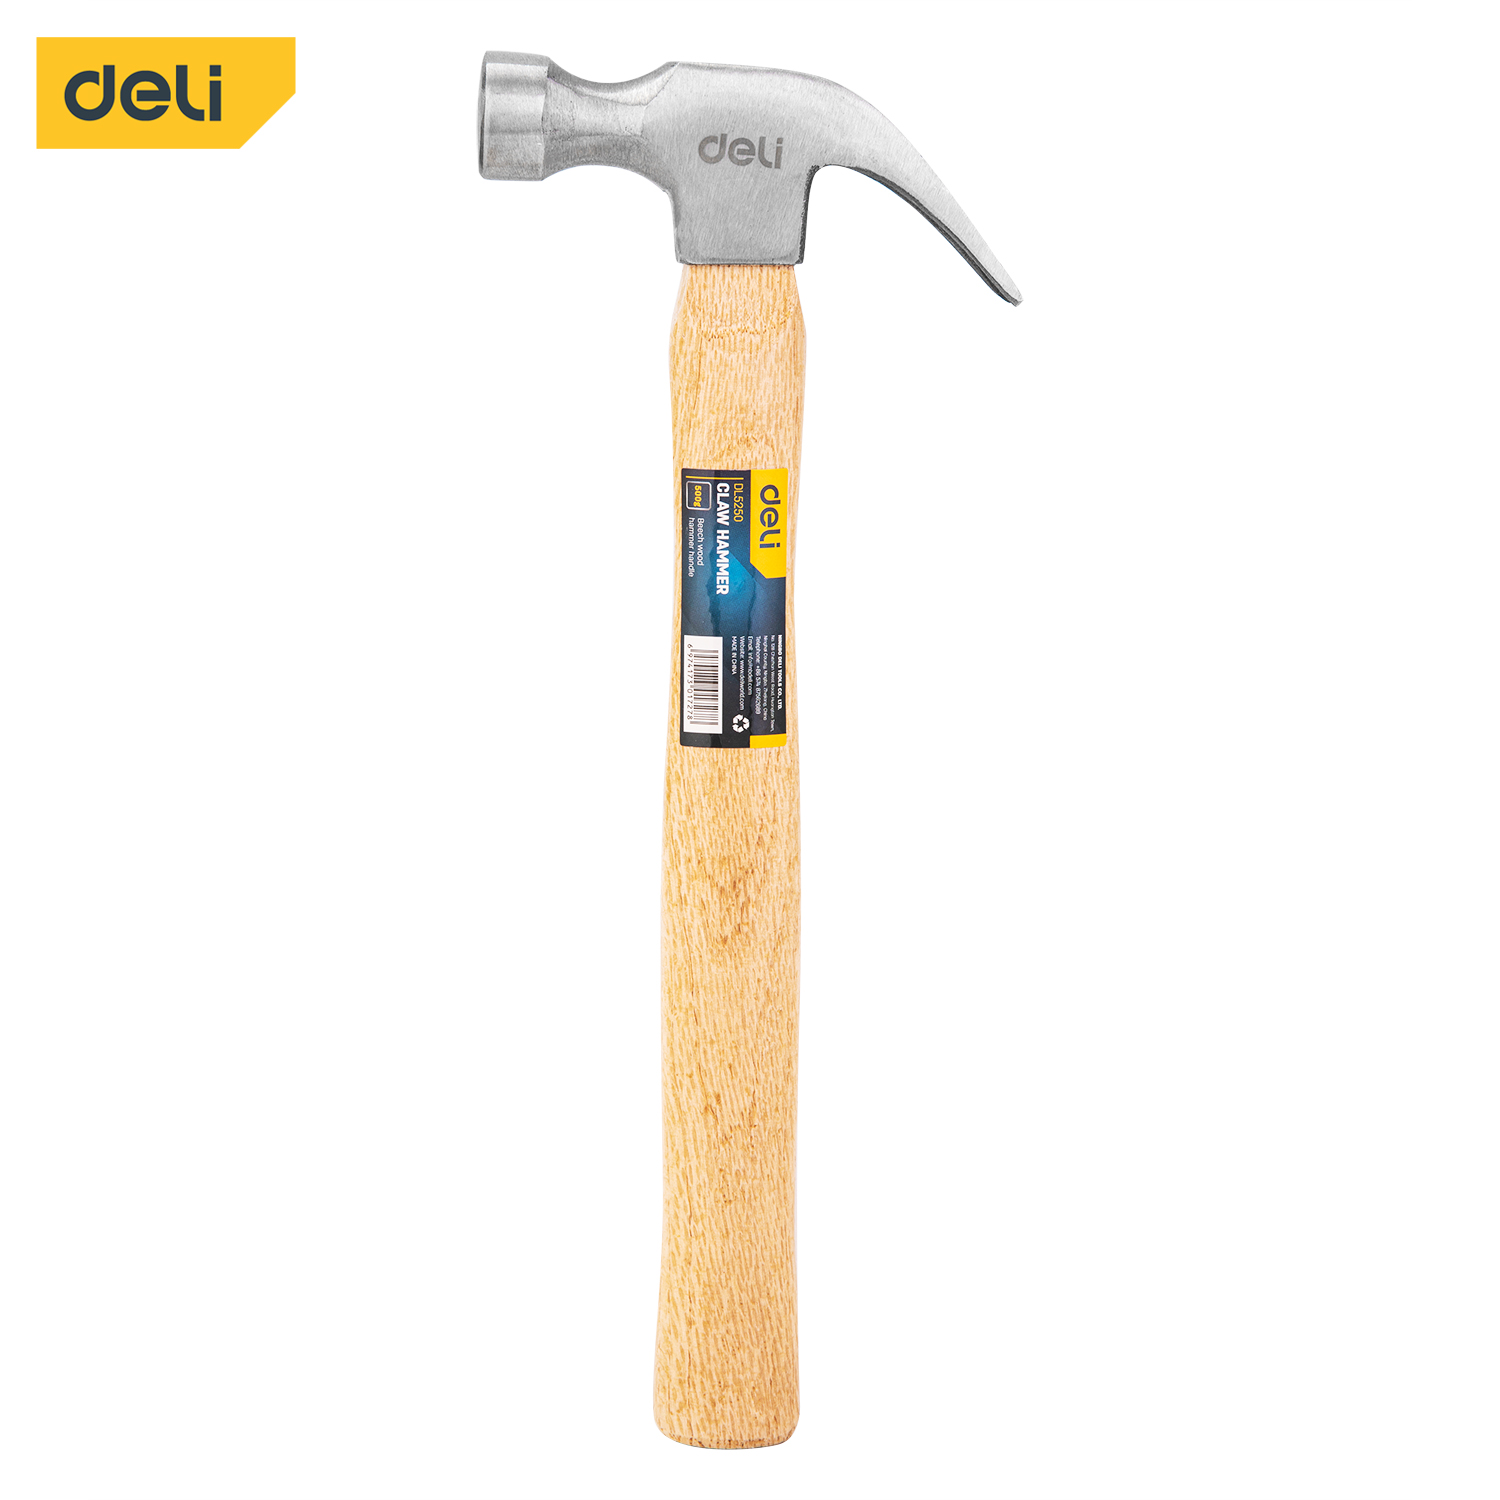 Deli-EDL5250 Claw Hammer 500g